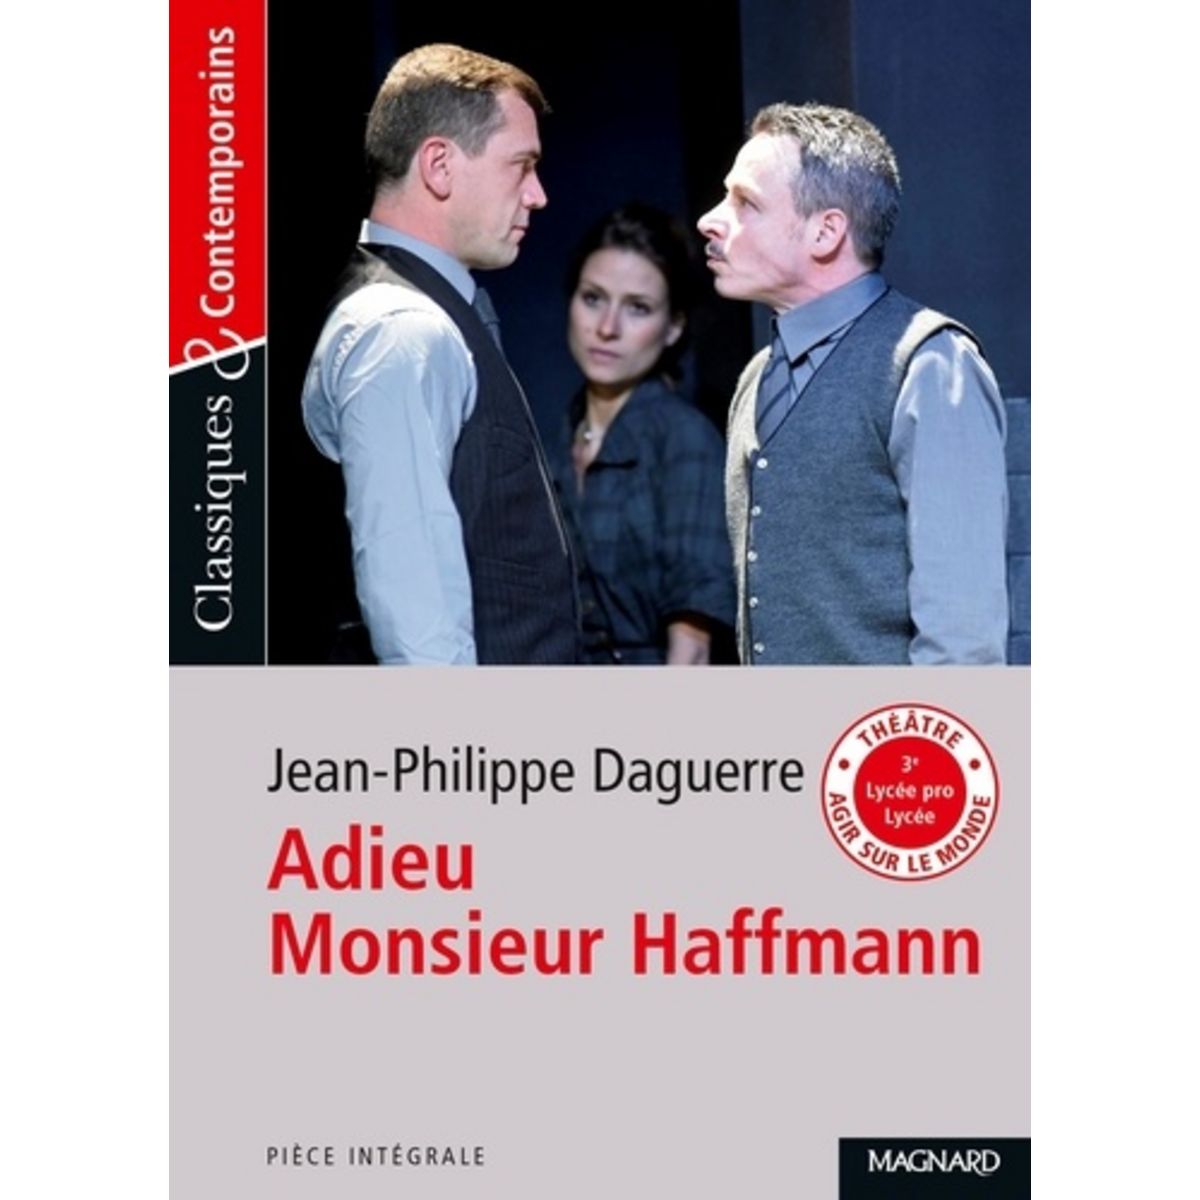  ADIEU MONSIEUR HAFFMANN, Daguerre Jean-Philippe